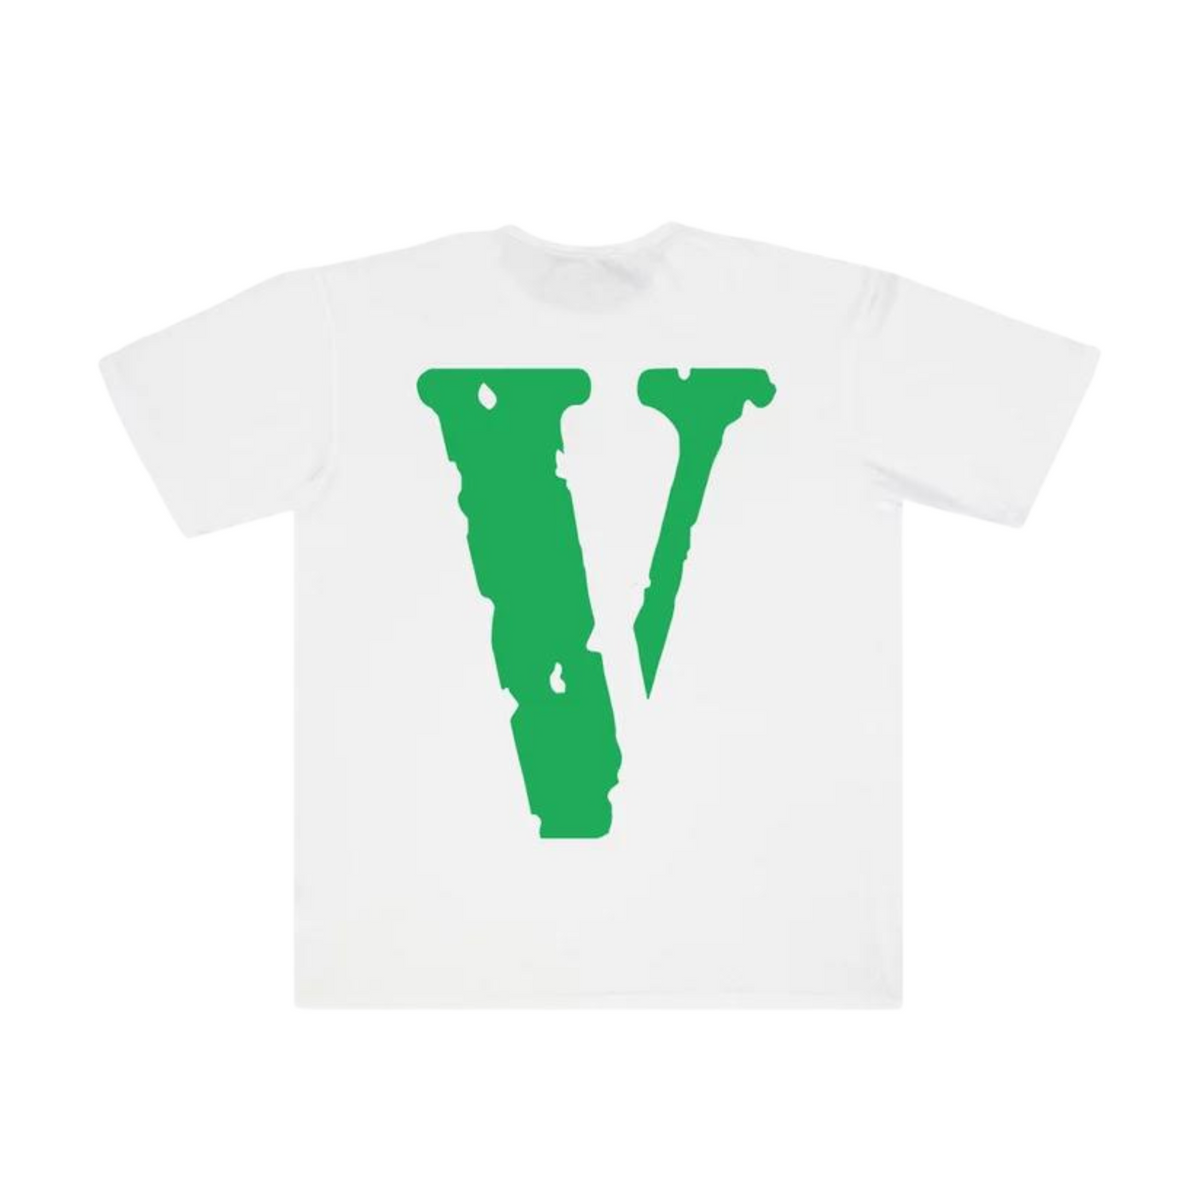 Vlone Staple T-shirt "White/Green"